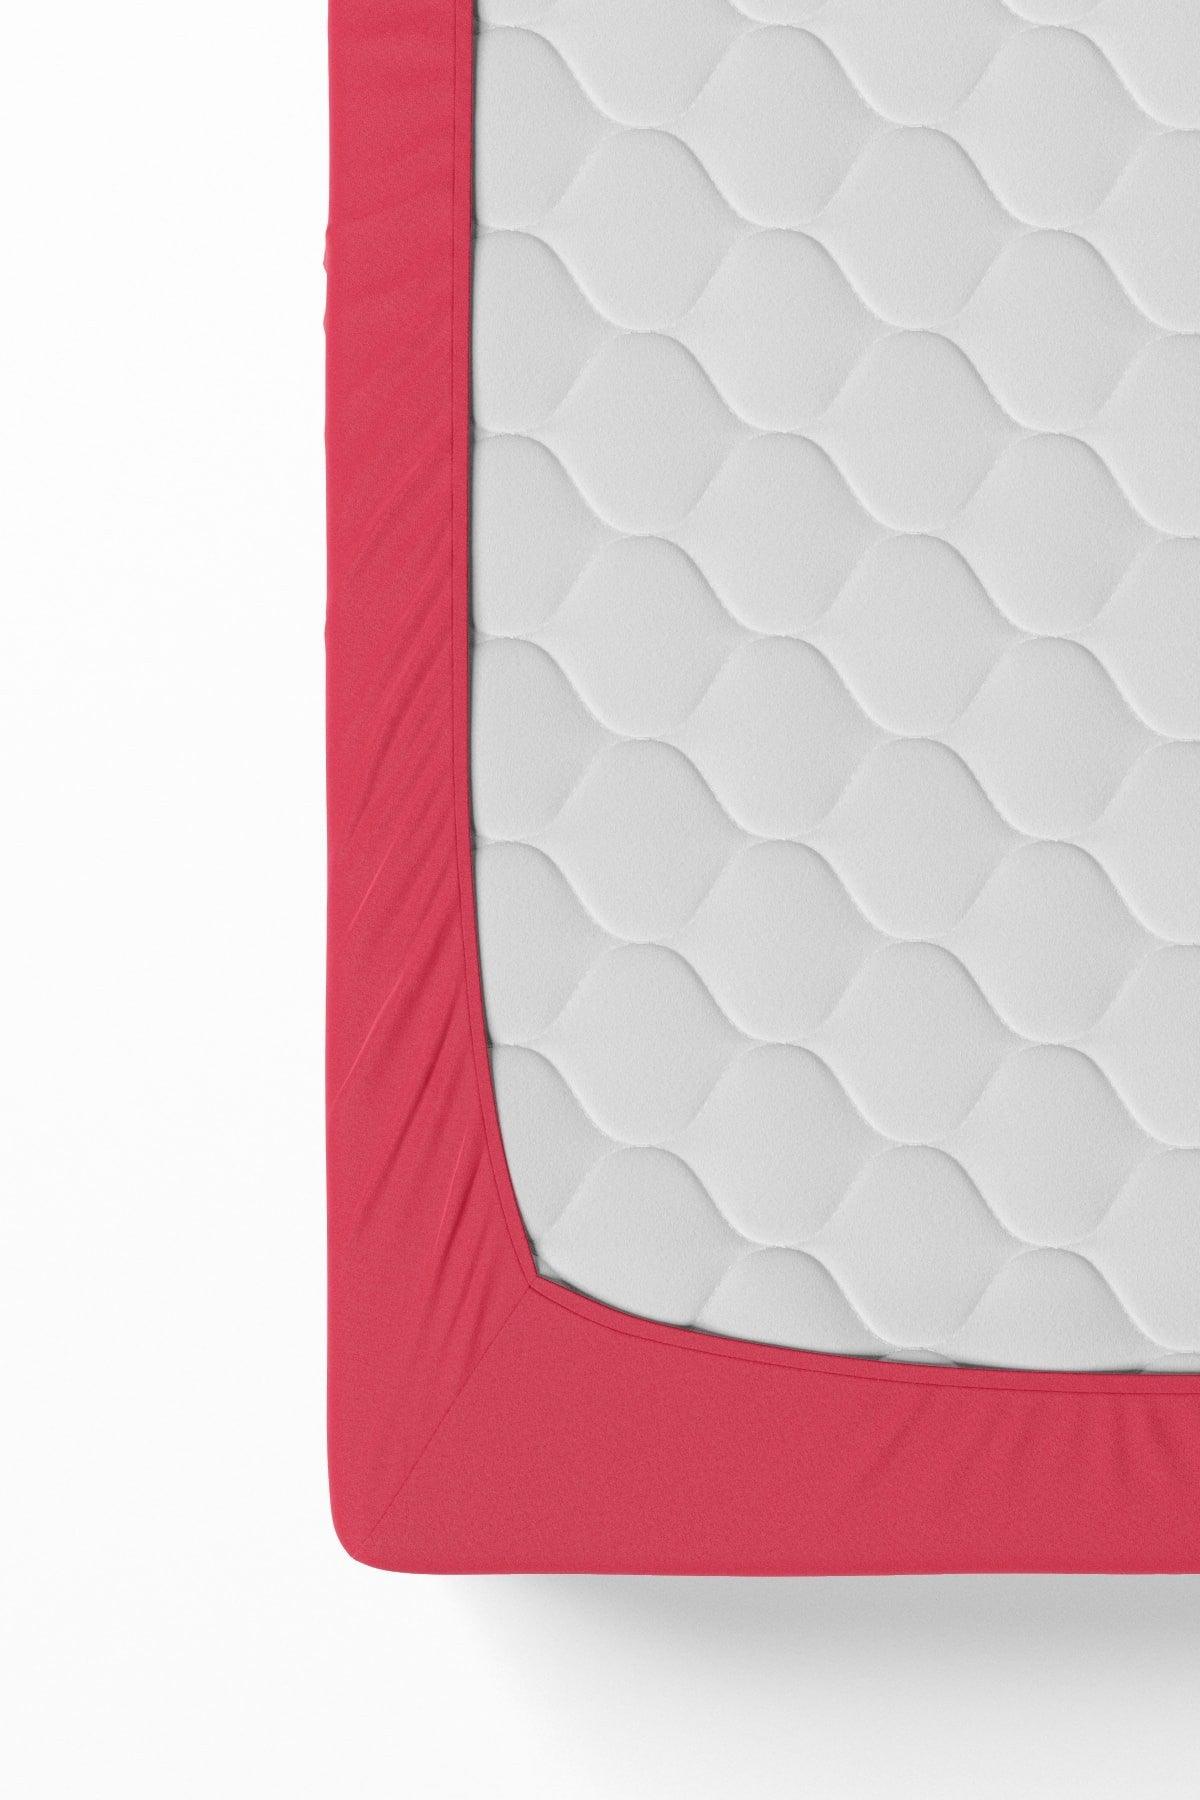 Single Cotton Elastic Bed Sheet - Red - Swordslife